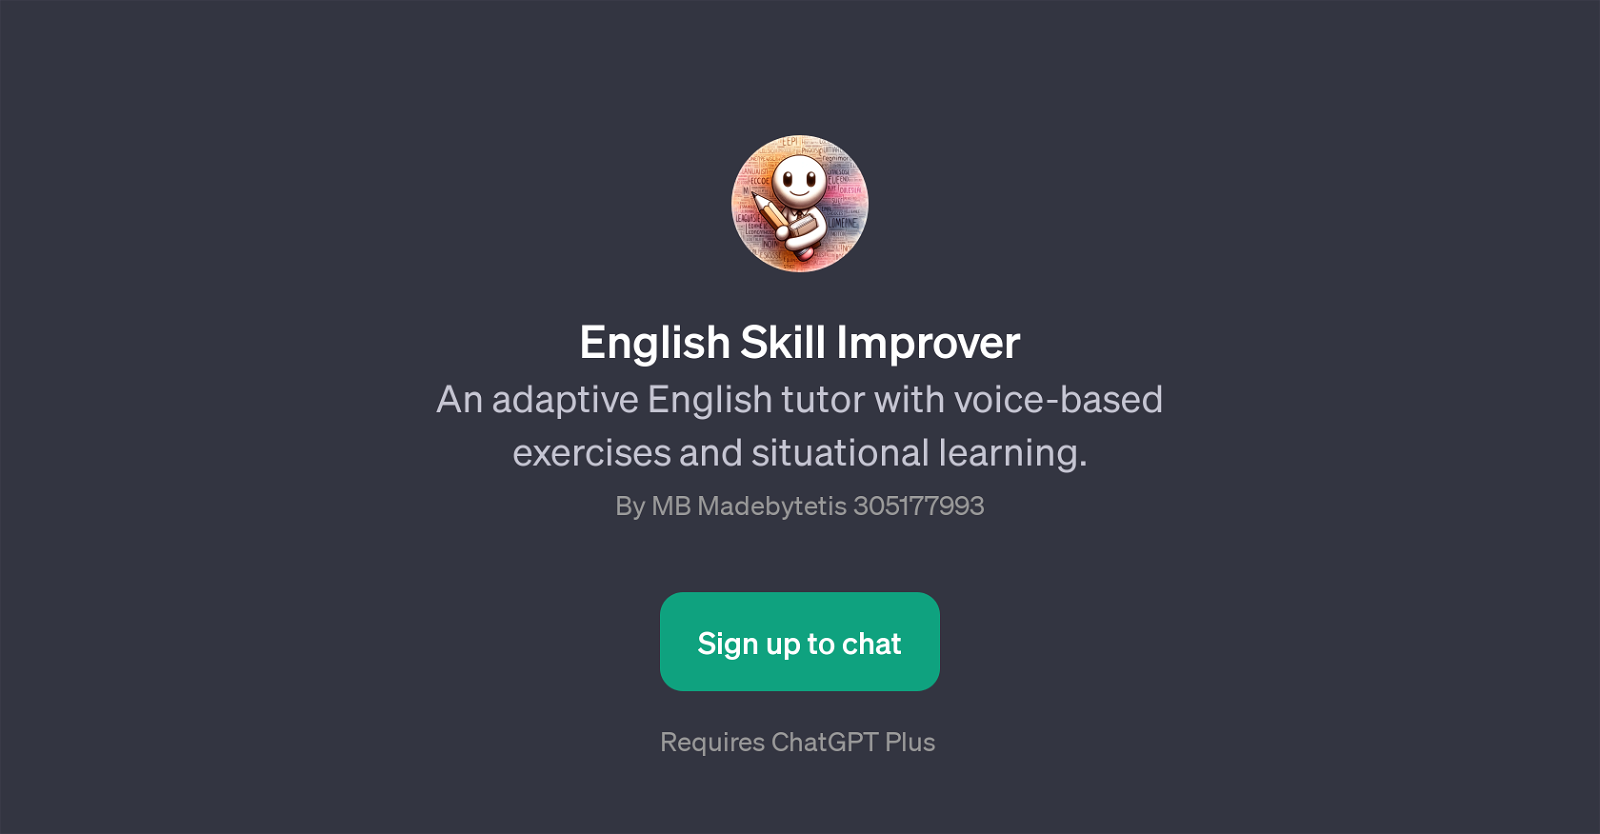 English Skill Improver website